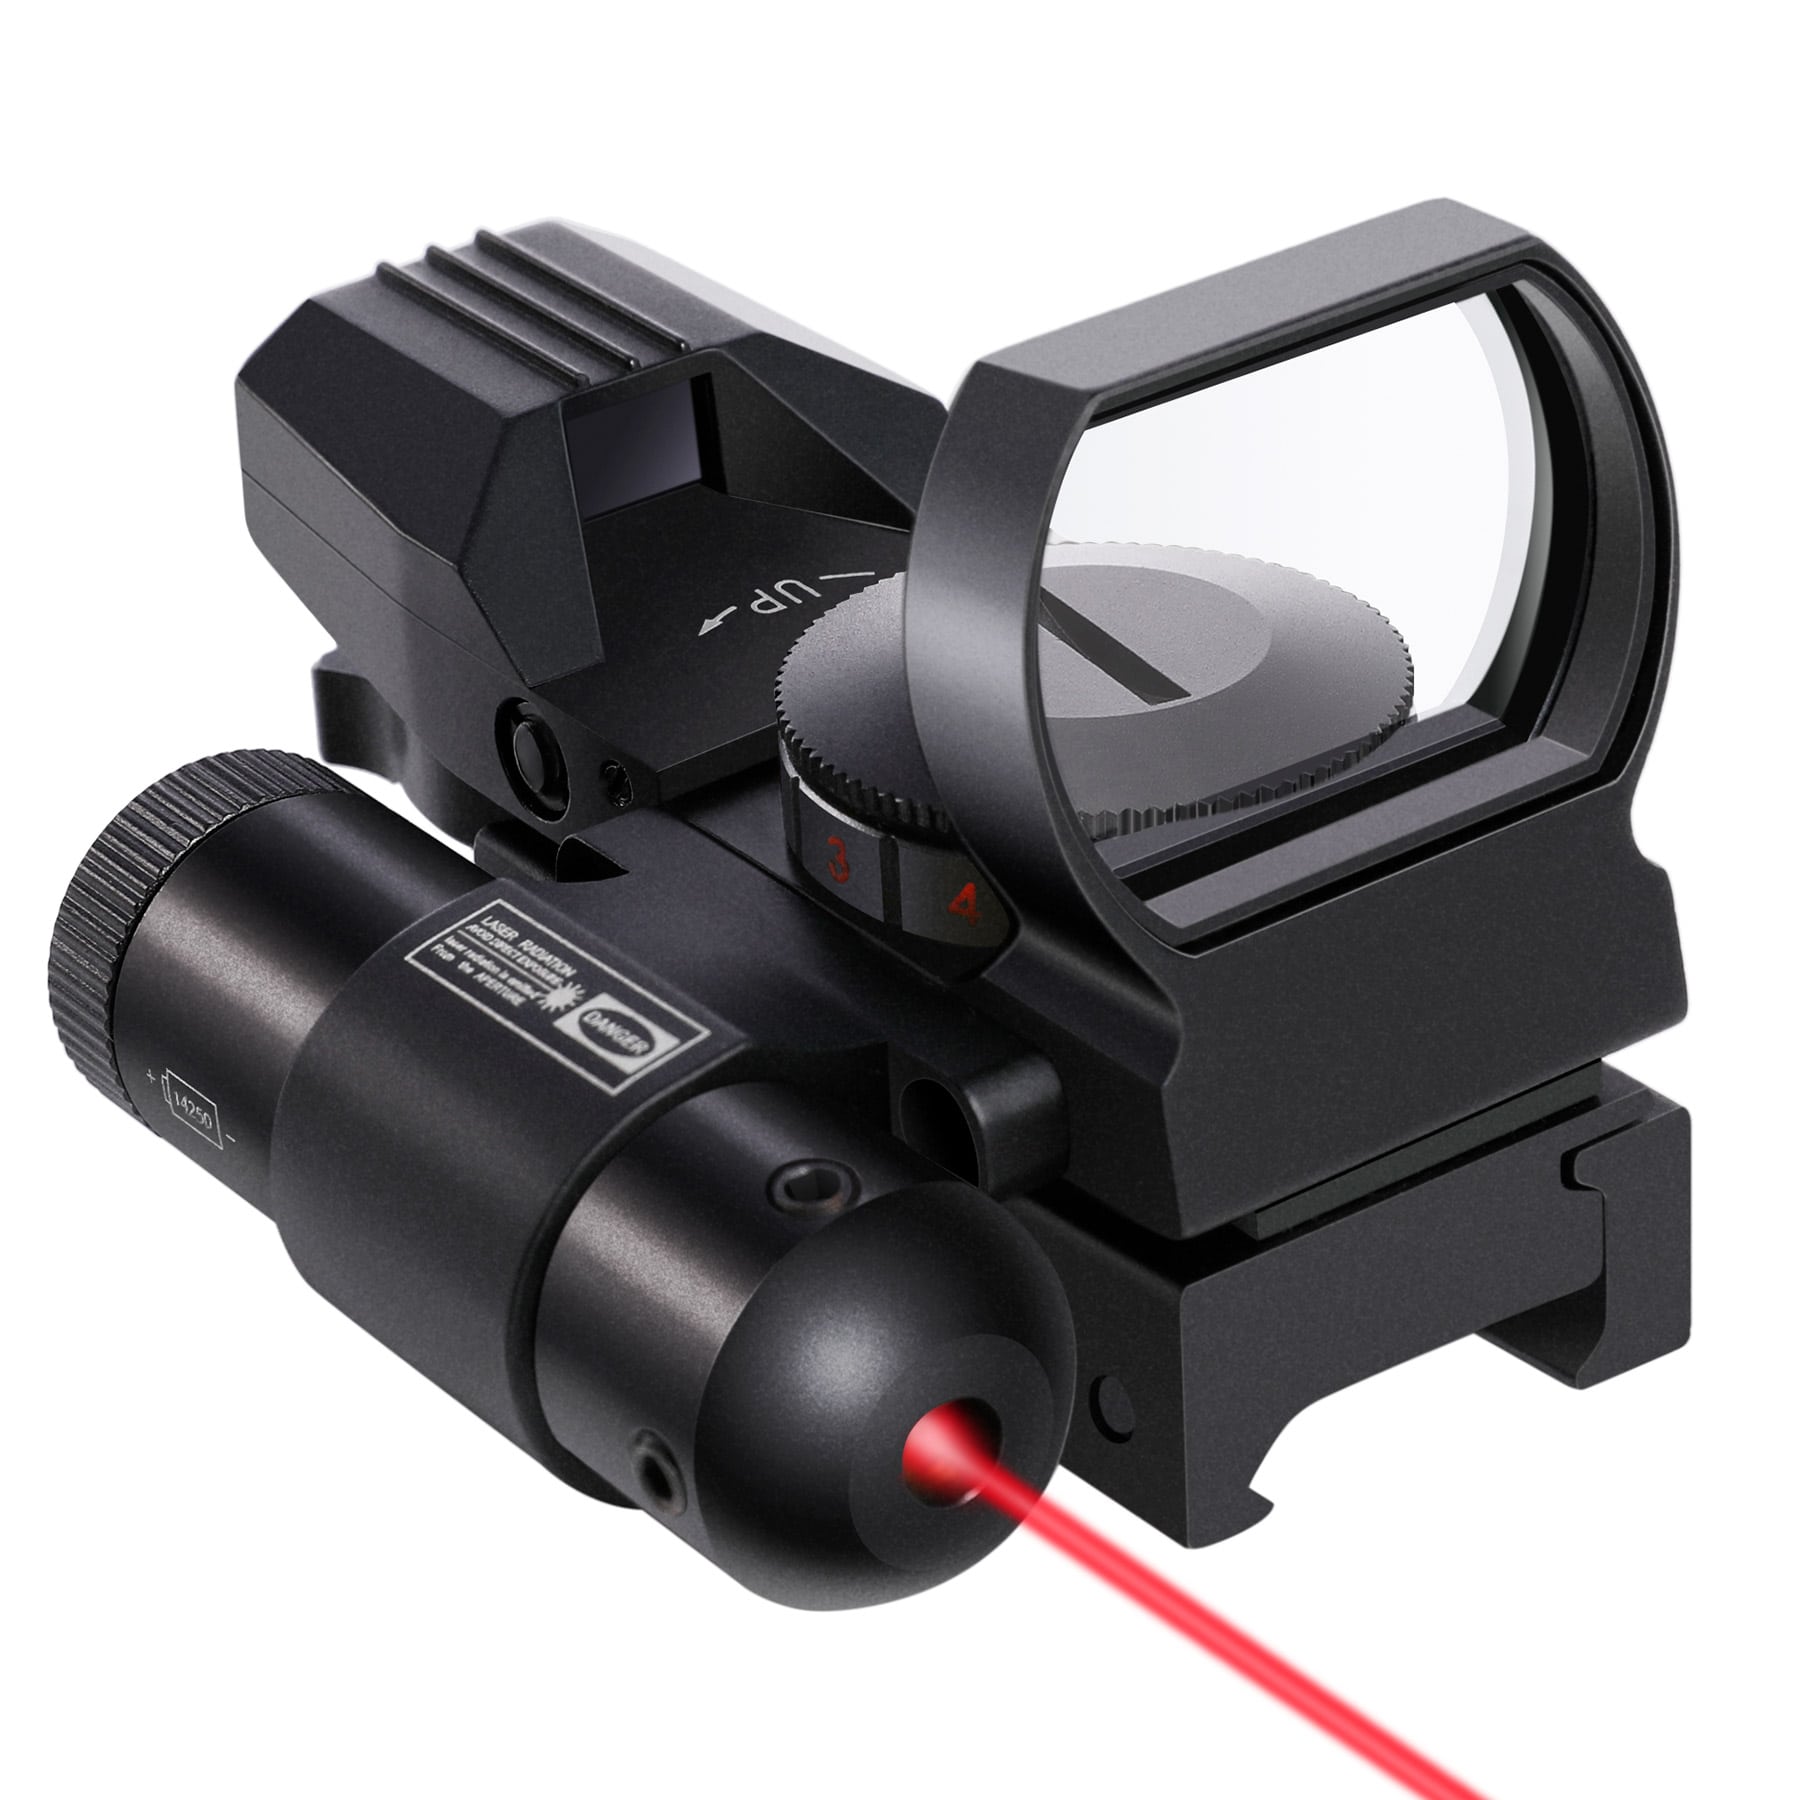 Mira holografica PINTY - Pro Series 1 * 30 mm con láser rojo, 2 MOA -  Police Tactical Equipment